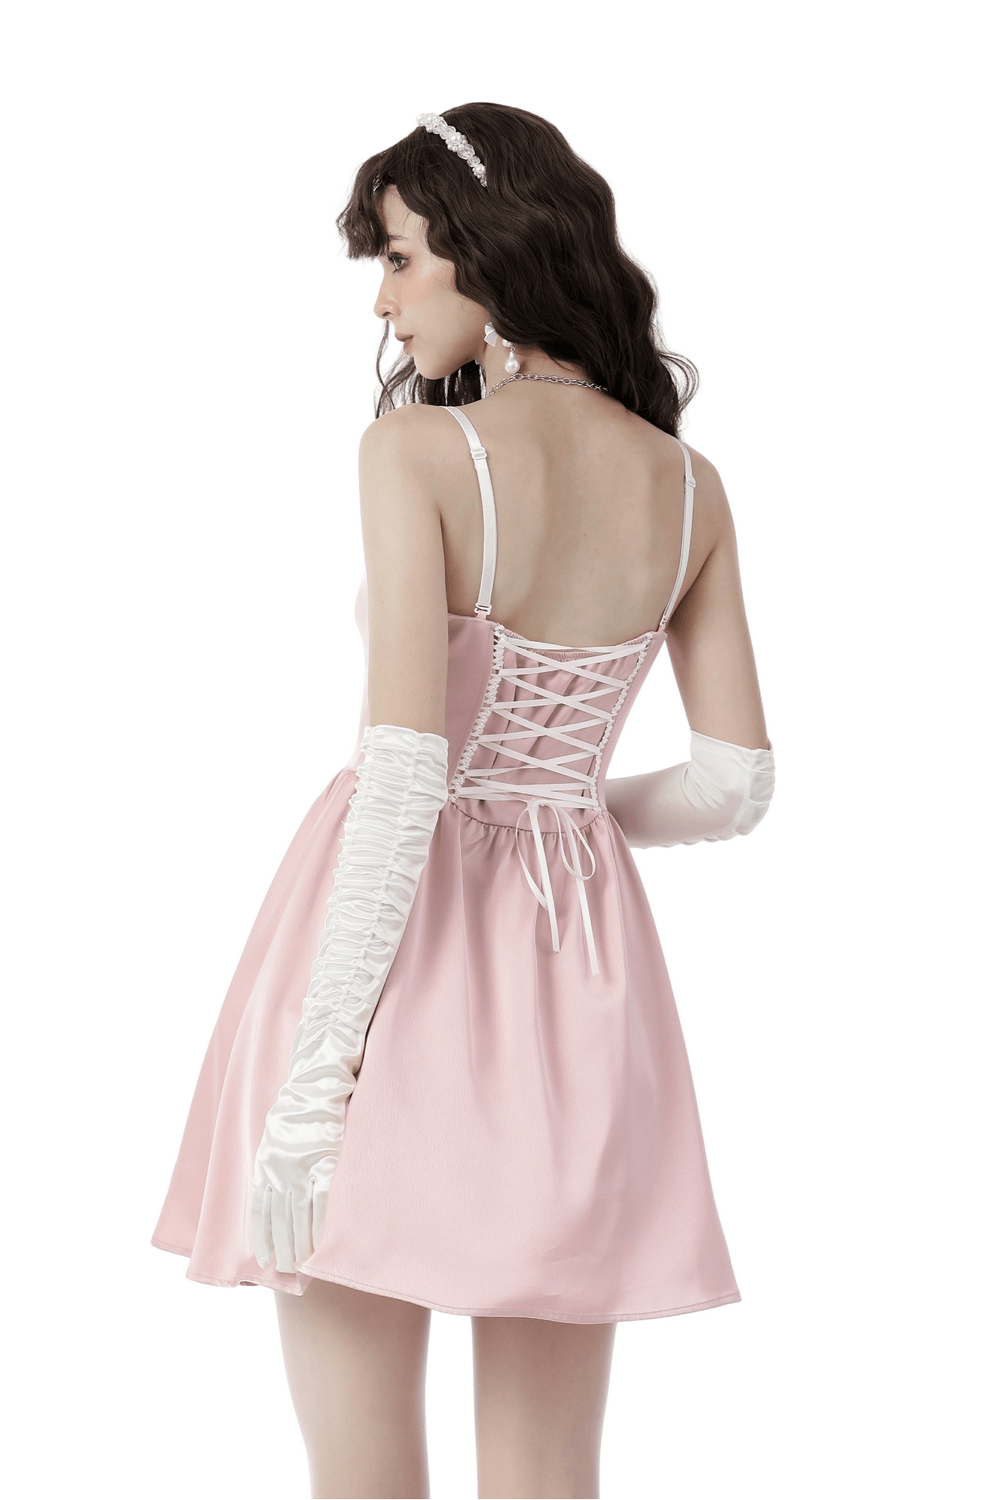 Elegant Pink Satin Bow Dress for Evening Events